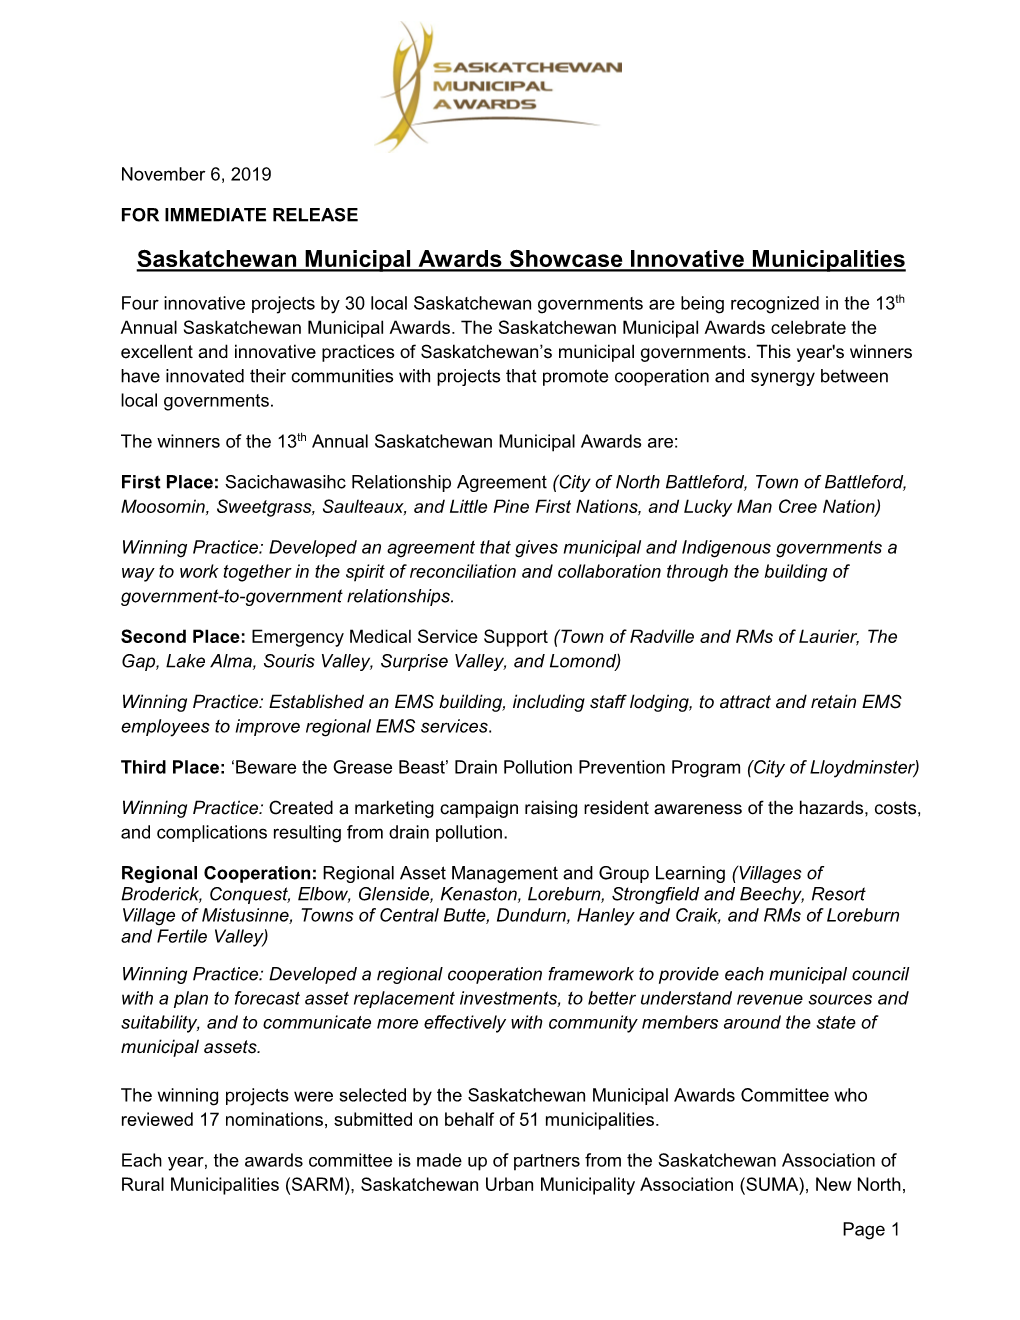 Saskatchewan Municipal Awards Showcase Innovative Municipalities